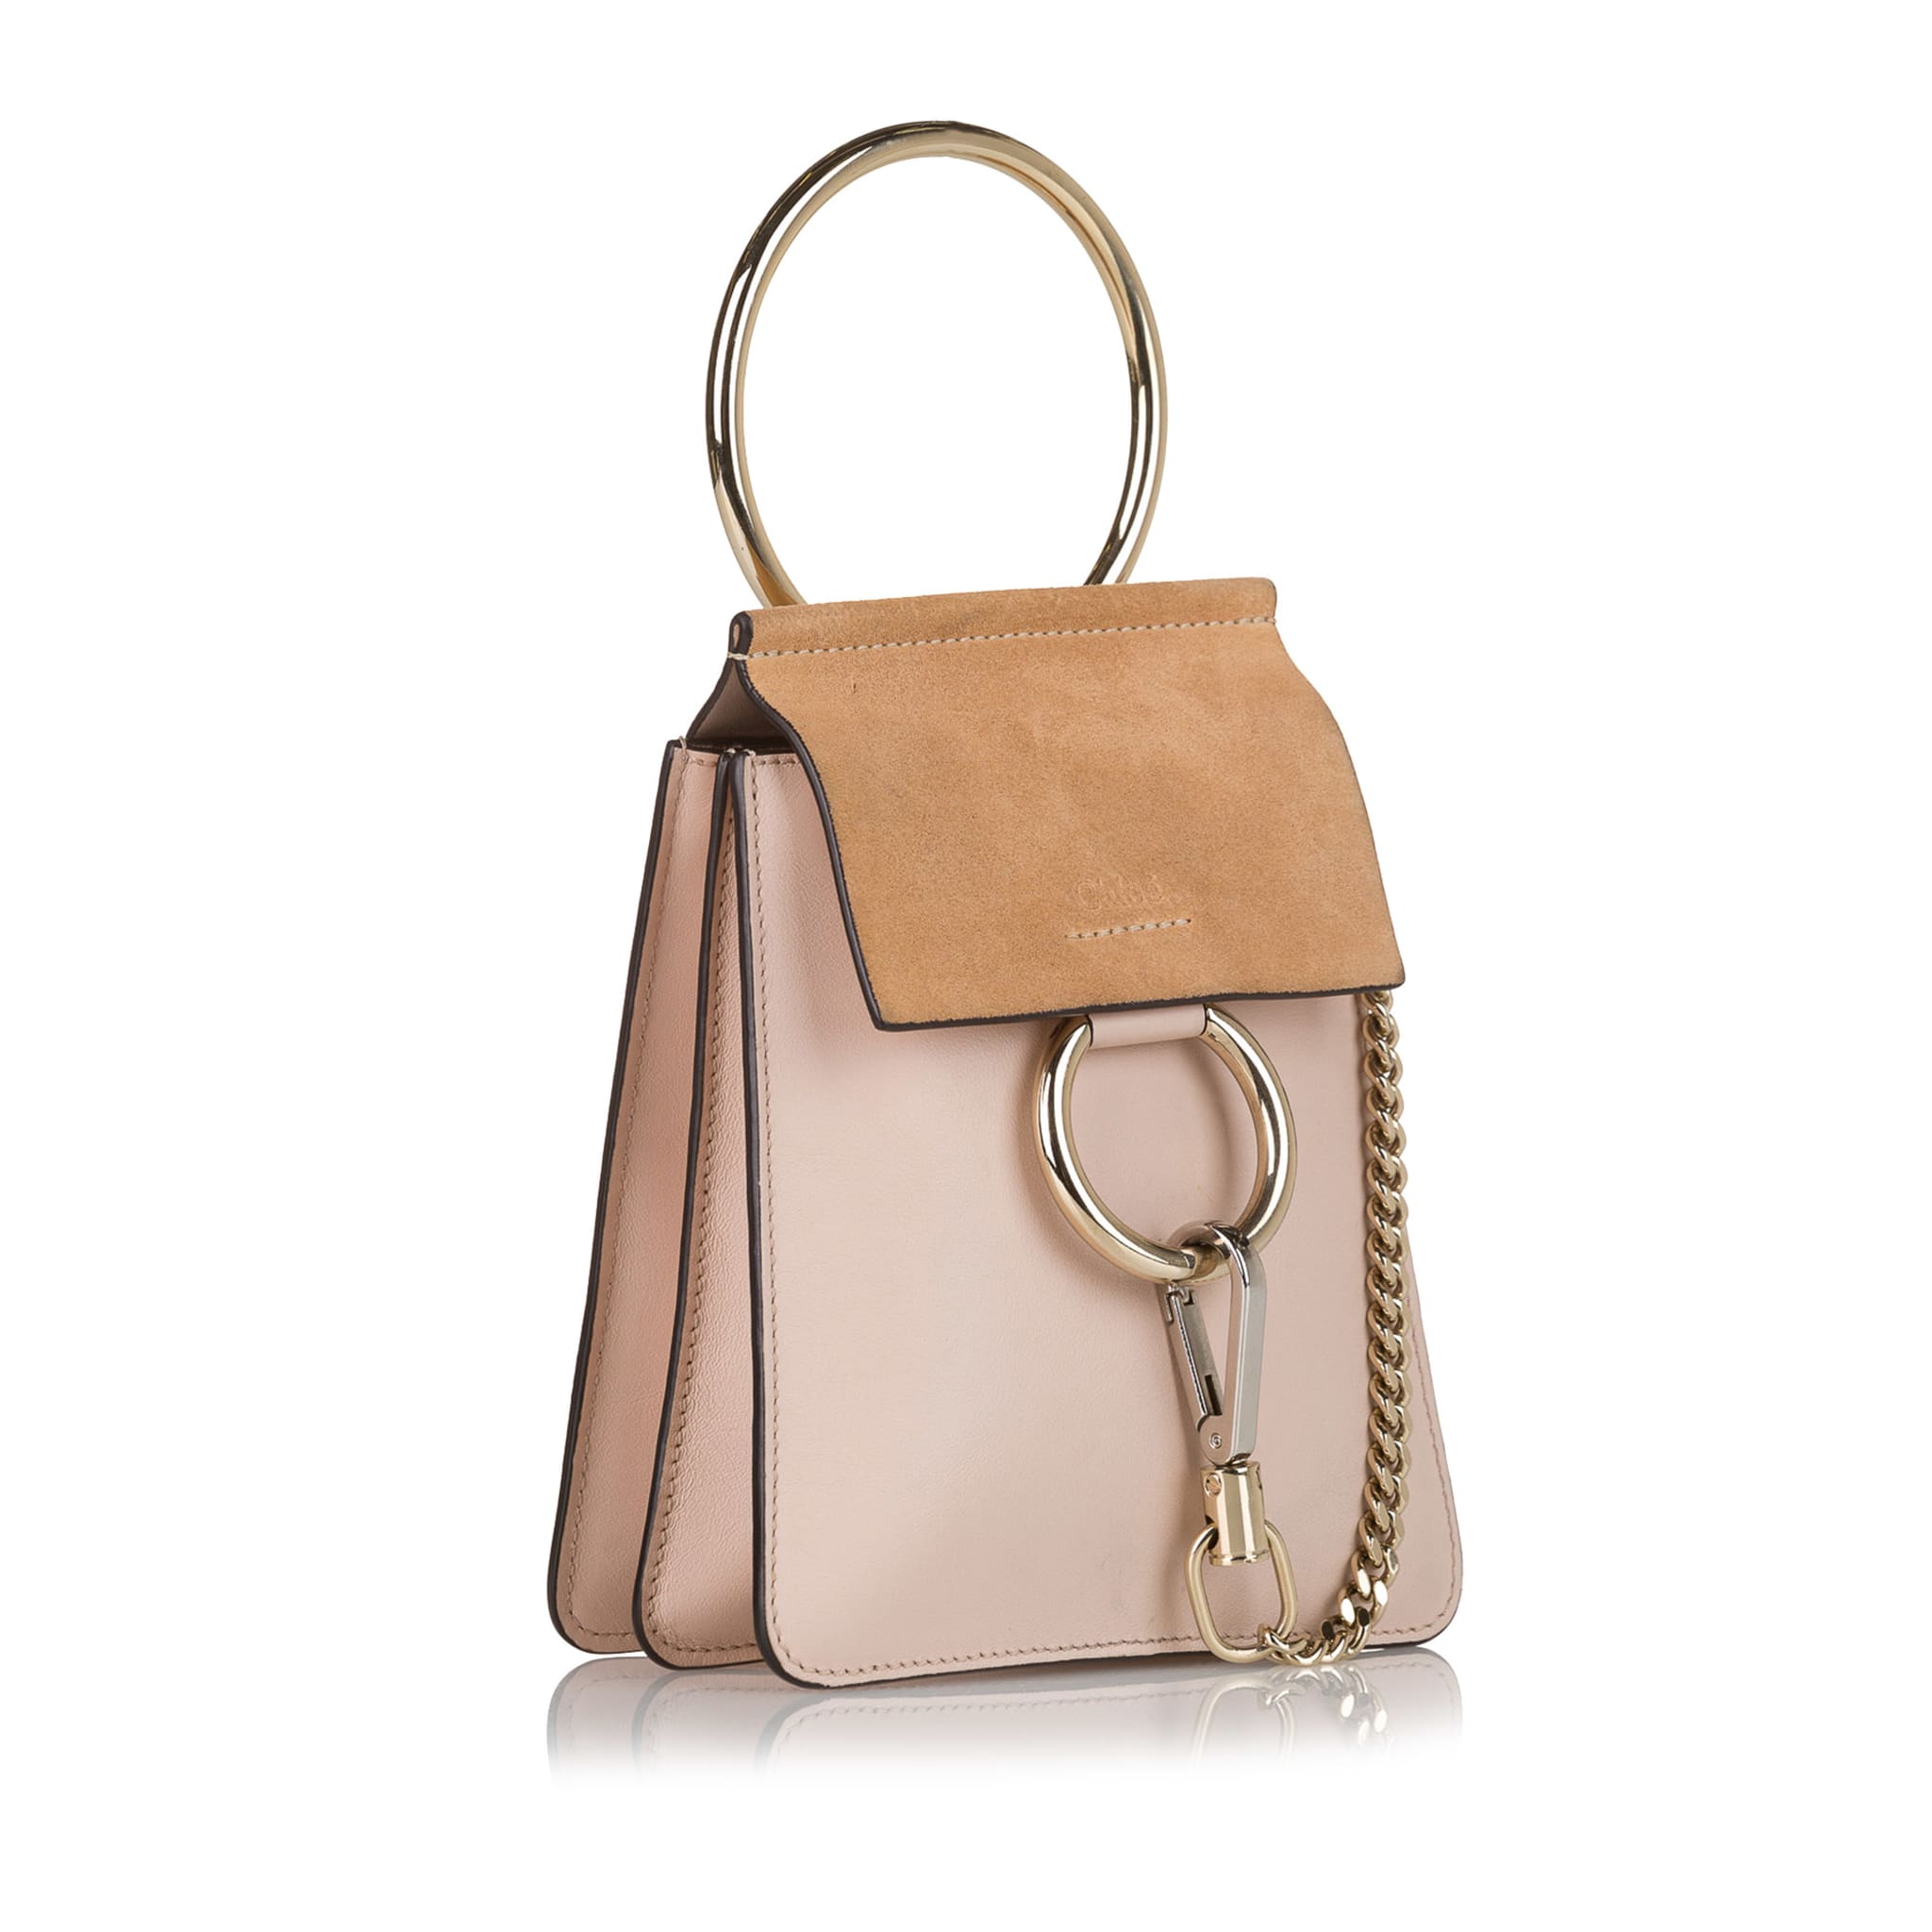 Chloe Faye Bracelet Leather Crossbody Bag, ONESIZE, light pink